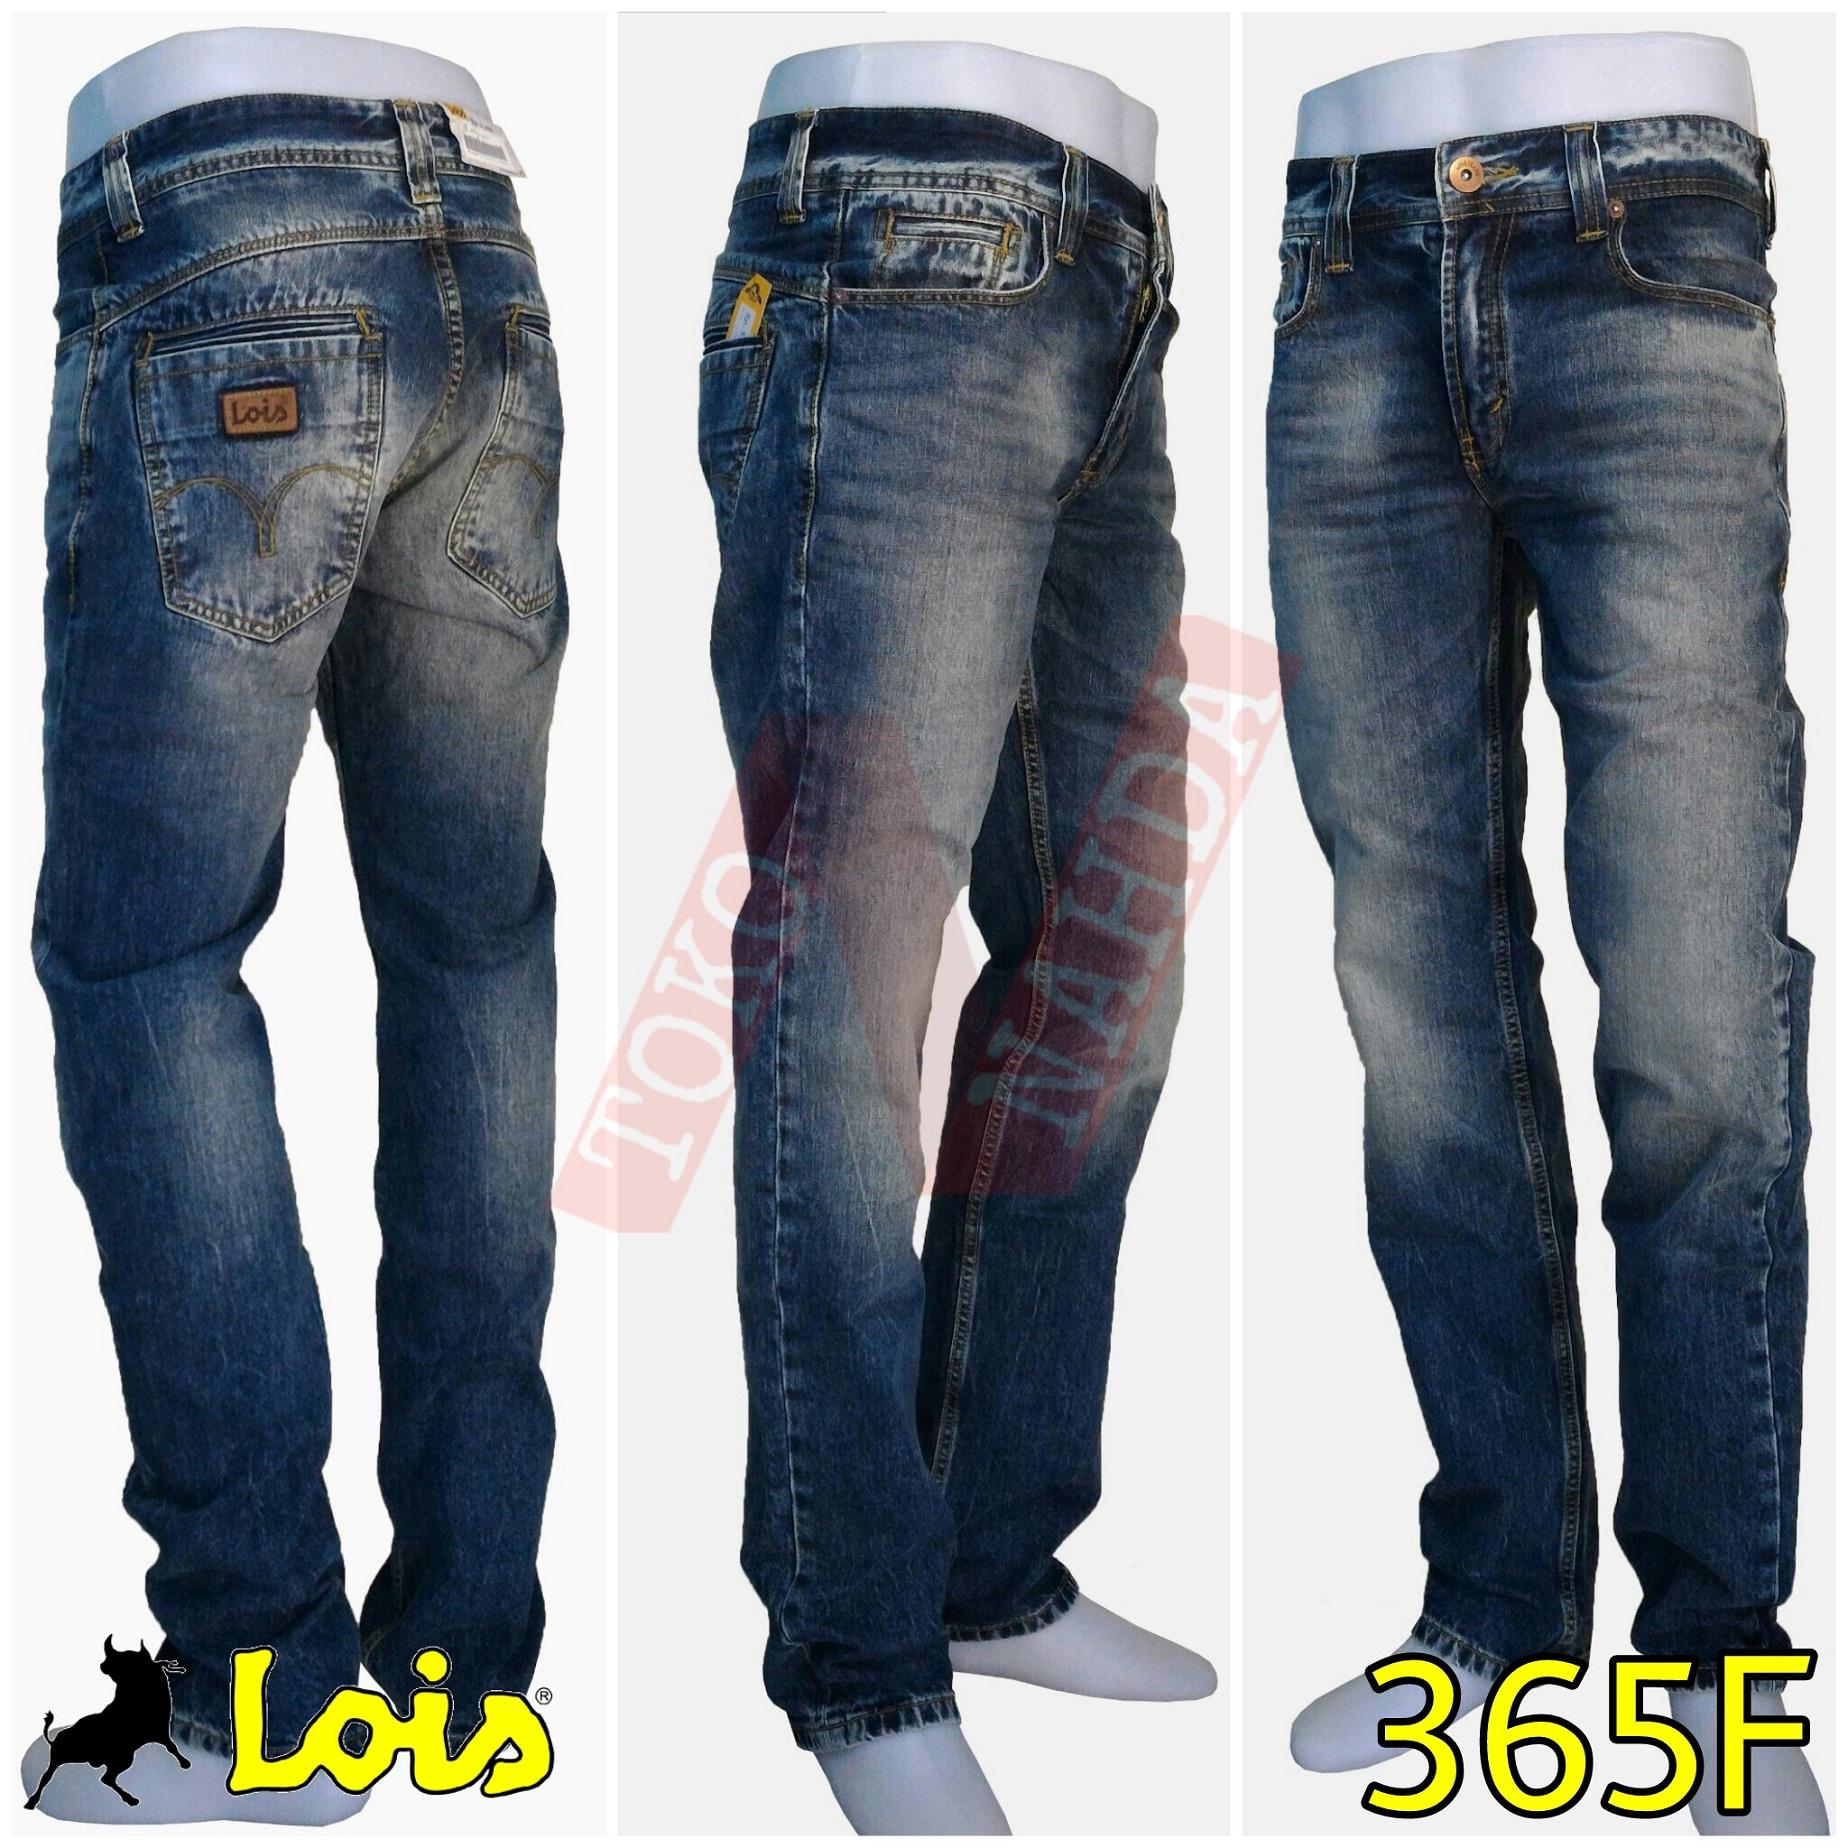  Celana  Jeans  Lois Original  Terbaru Kumpulan Model Kemeja